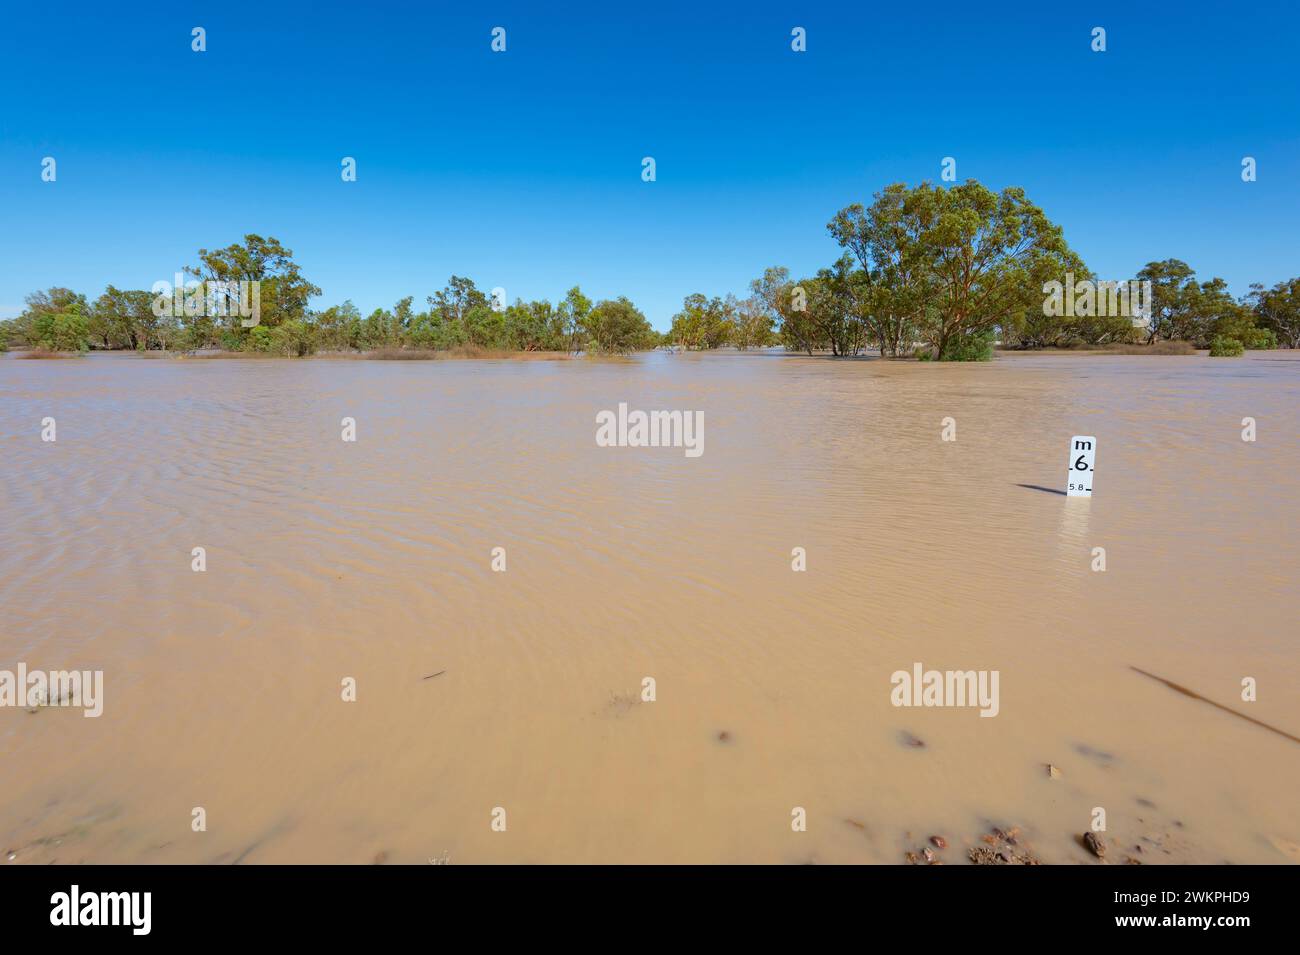 Cooper Creek en pleine inondation à 6 mètres dans l'Outback australien, Innamincka, Queensland, Queensland, Queensland, Australie Banque D'Images